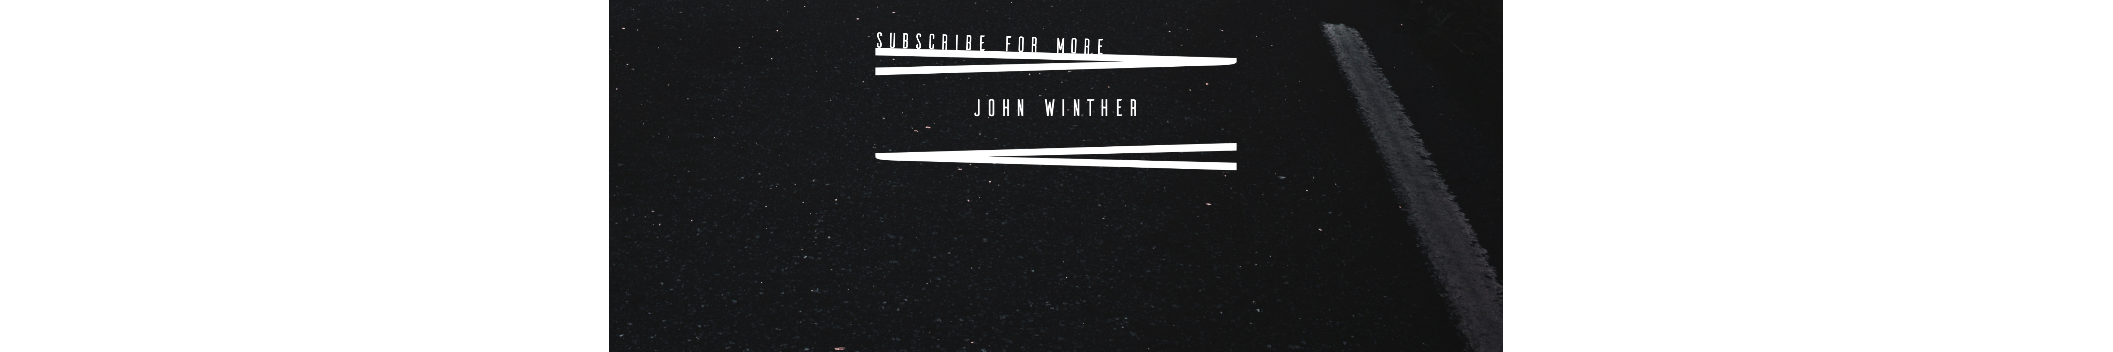 John Winther